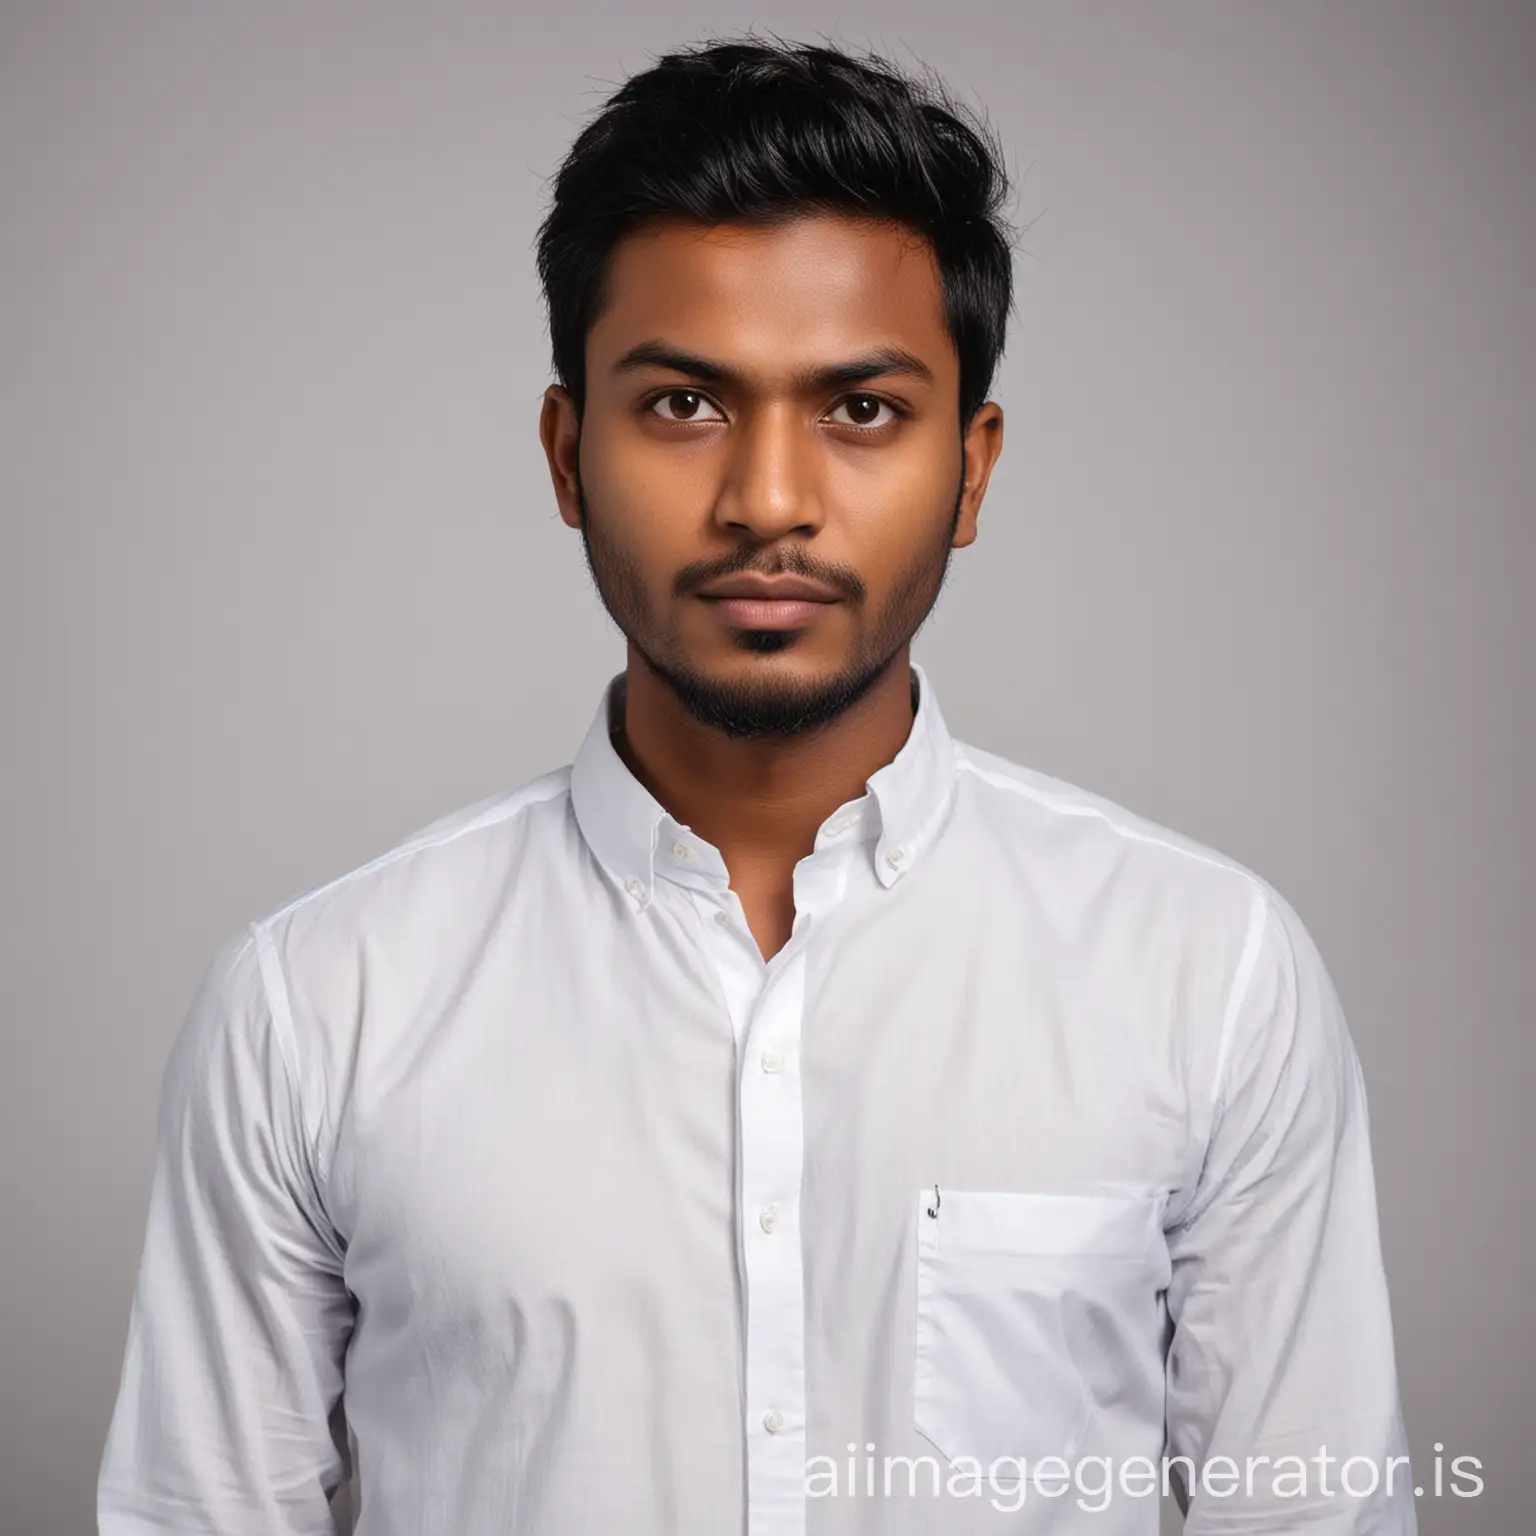 Bangladeshi-Man-in-White-Shirt-Poses-for-Passport-Photo